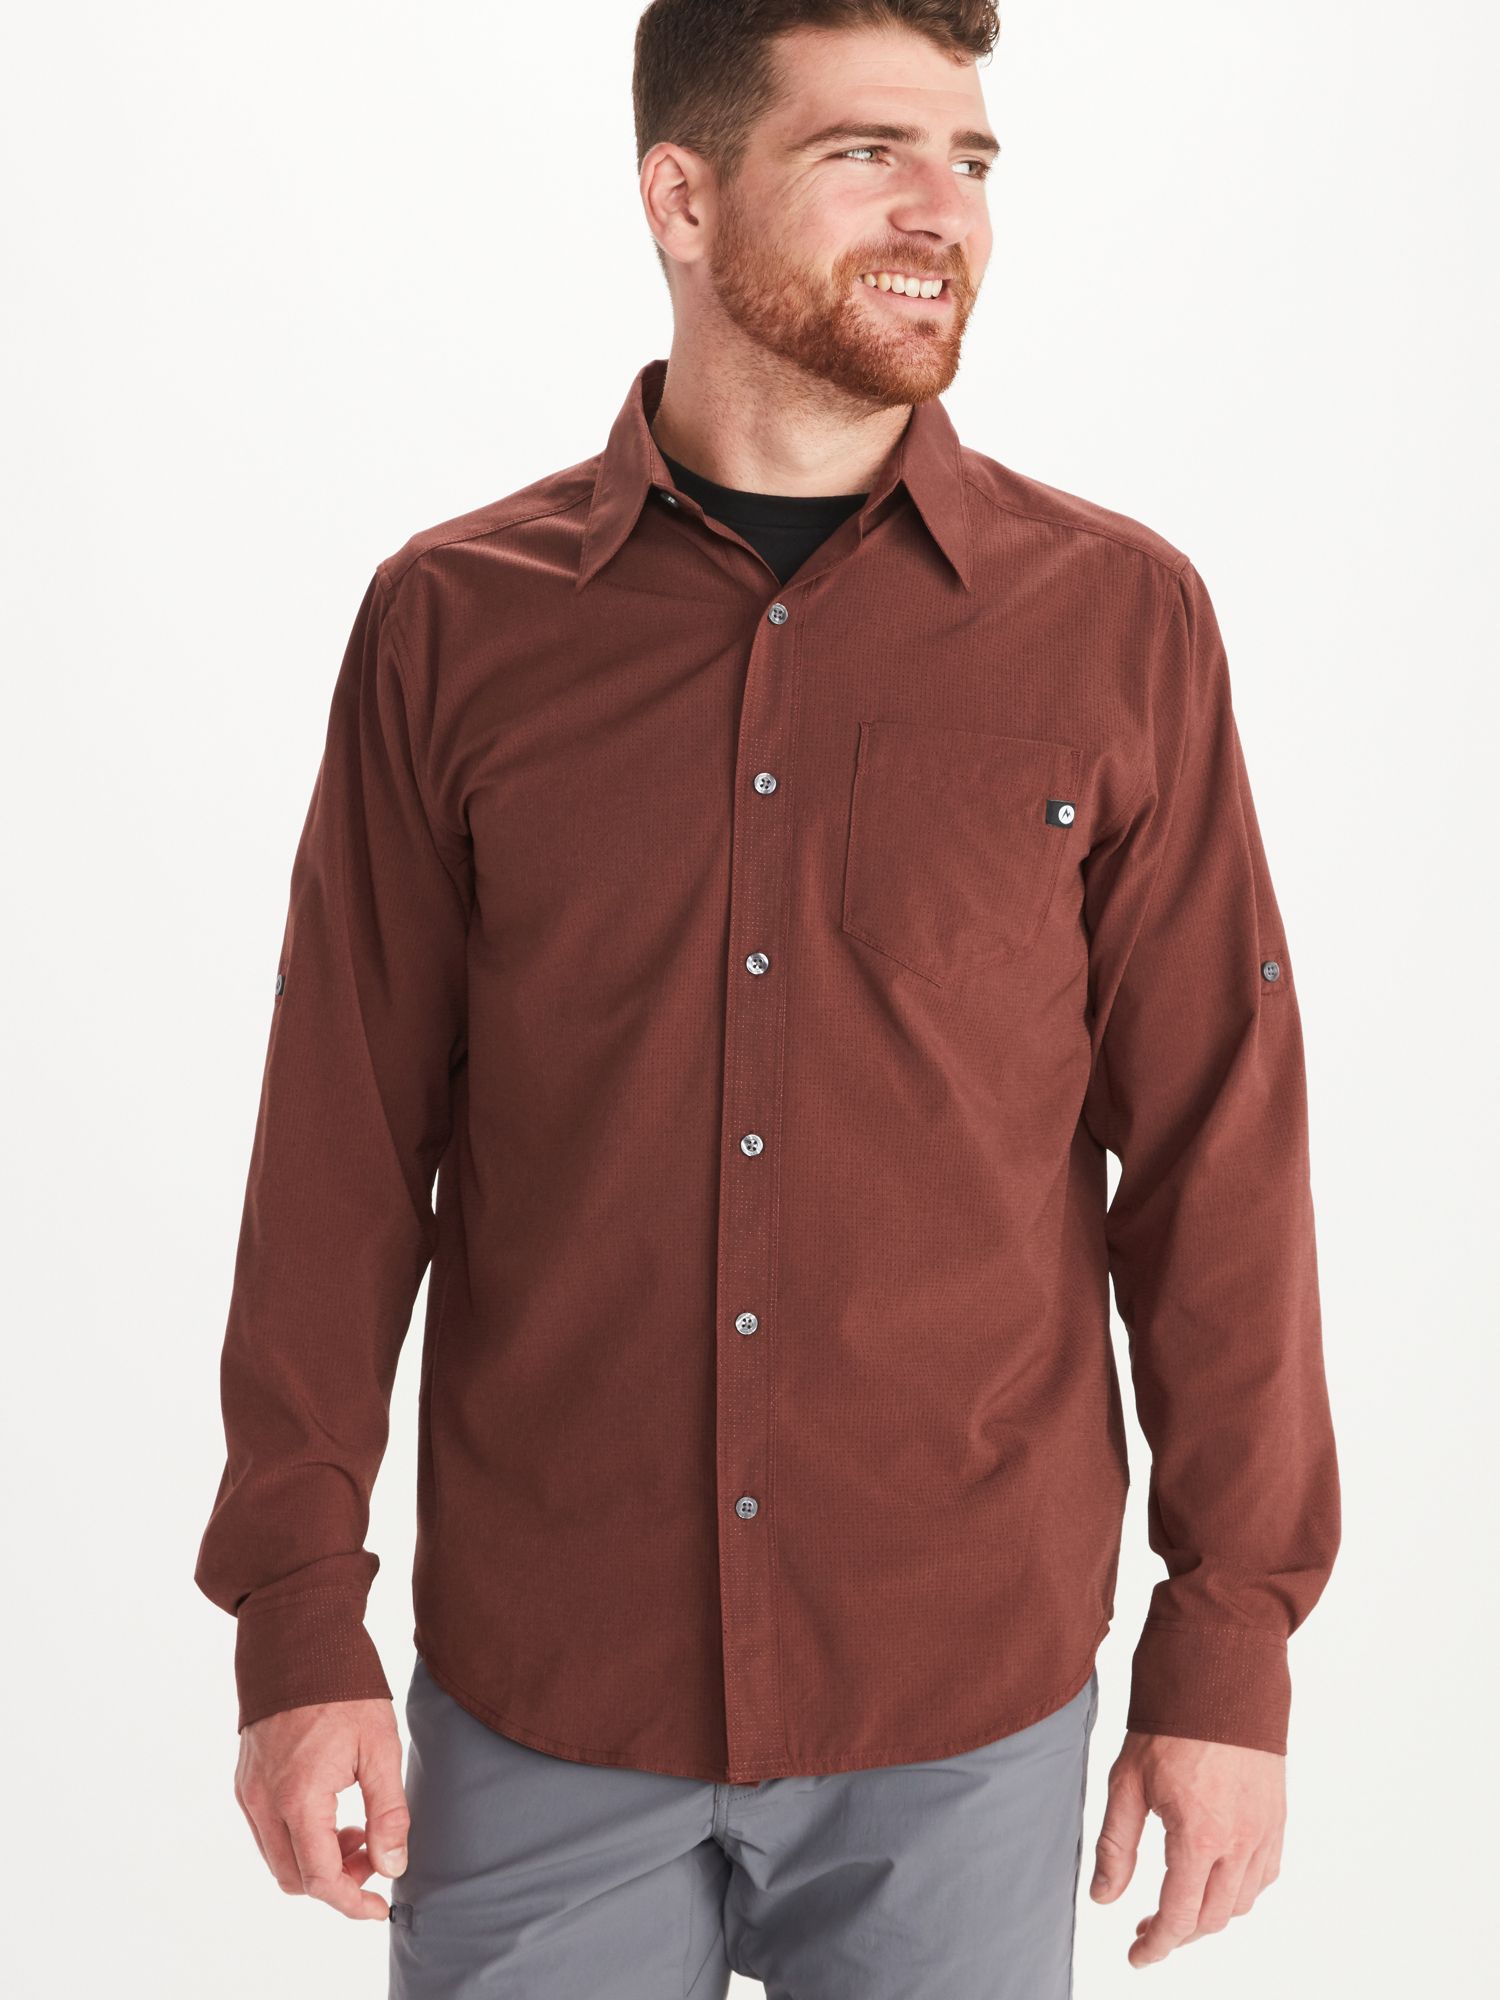 Men's Aerobora Long-Sleeve Shirt | Marmot